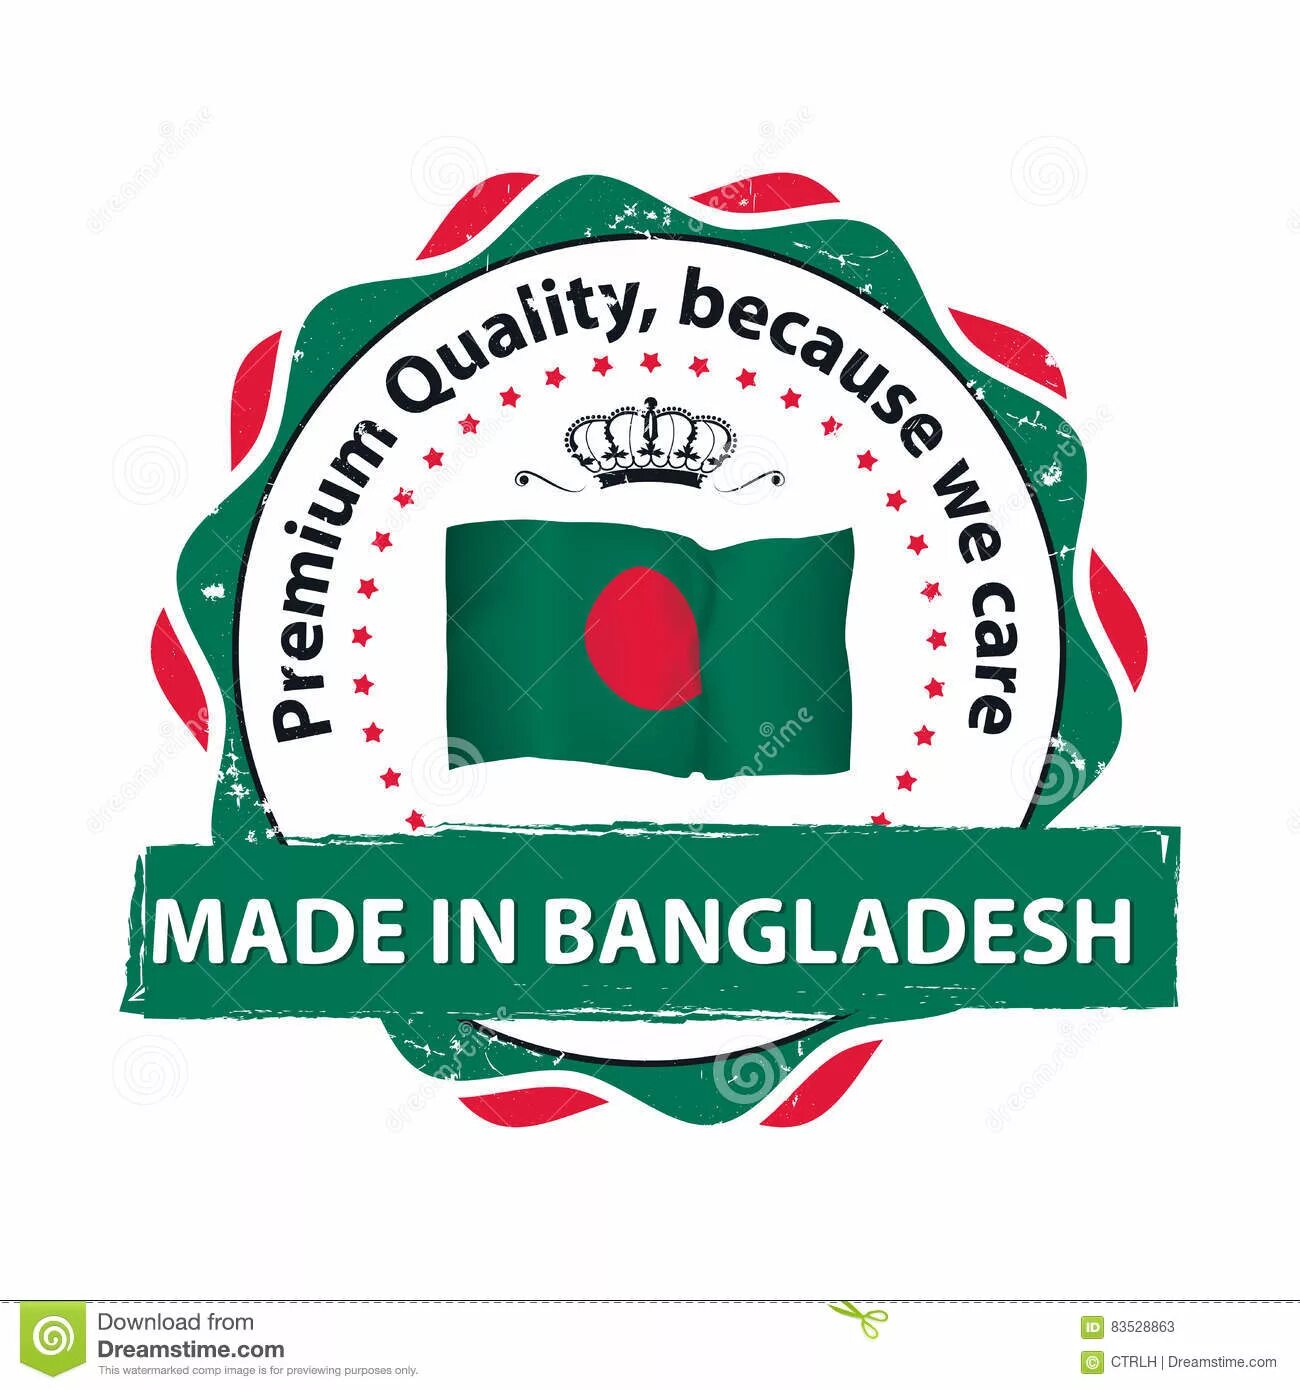 Made in bangladesh. Made Bangladesh Страна производитель. Значок Бангладеш премиум качество. Логотип made in Russia Premium quality.